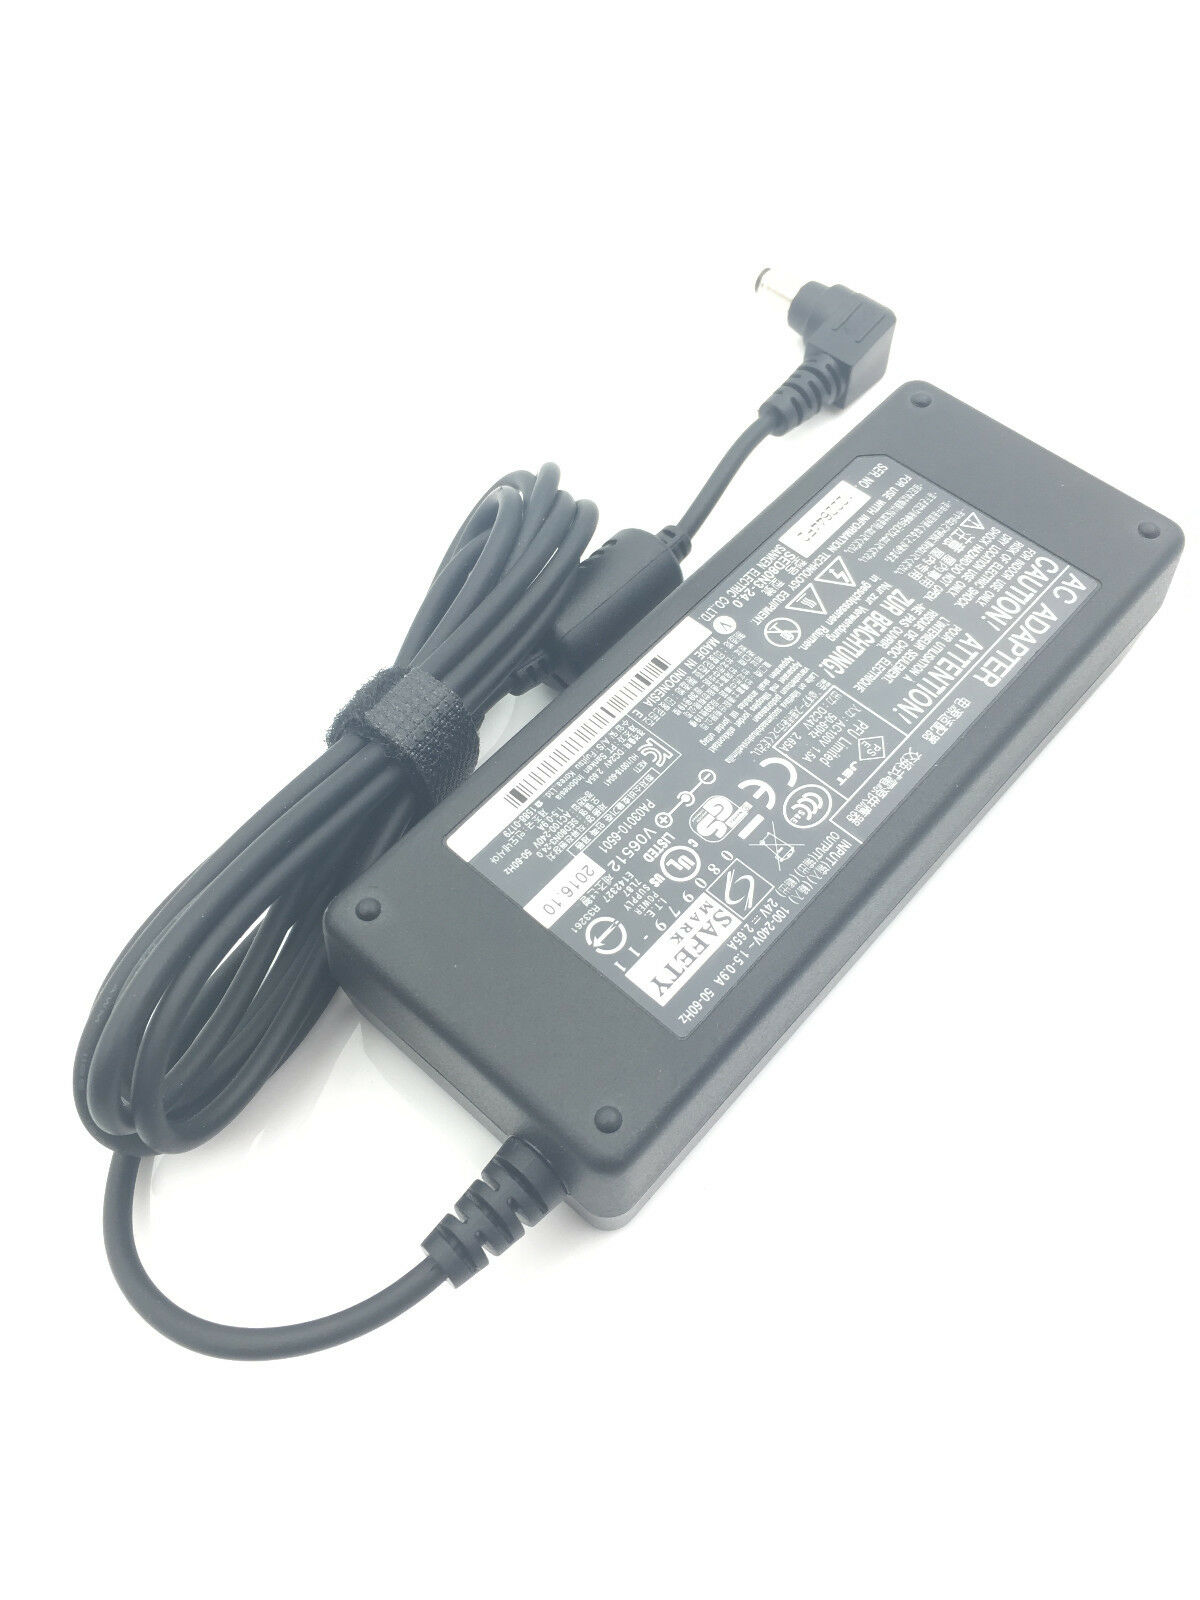 OEM QUALITY AC Power Adapter for Fujitsu fi-7160 fi-7180 fi-7260 PA03670-K905 Compatible Brand: For Fujitsu QTY: 1PC